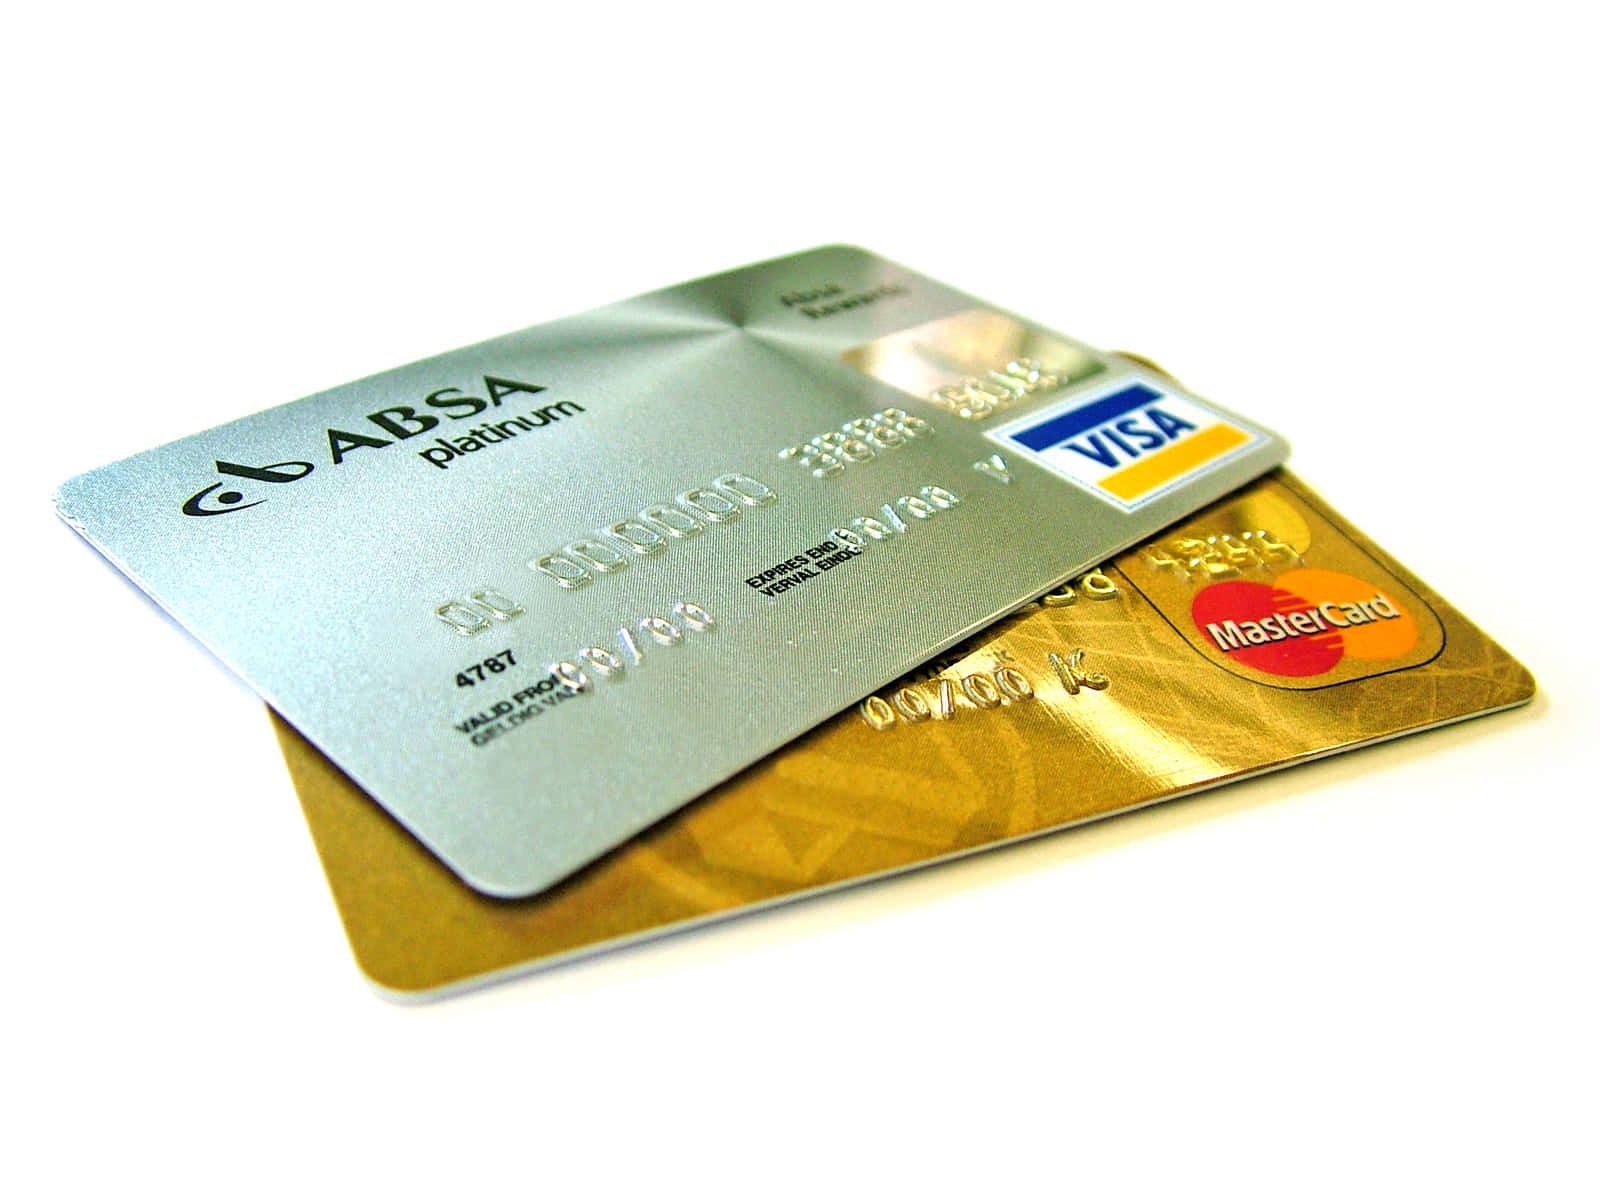 Tvåkreditkort På En Vit Bakgrund